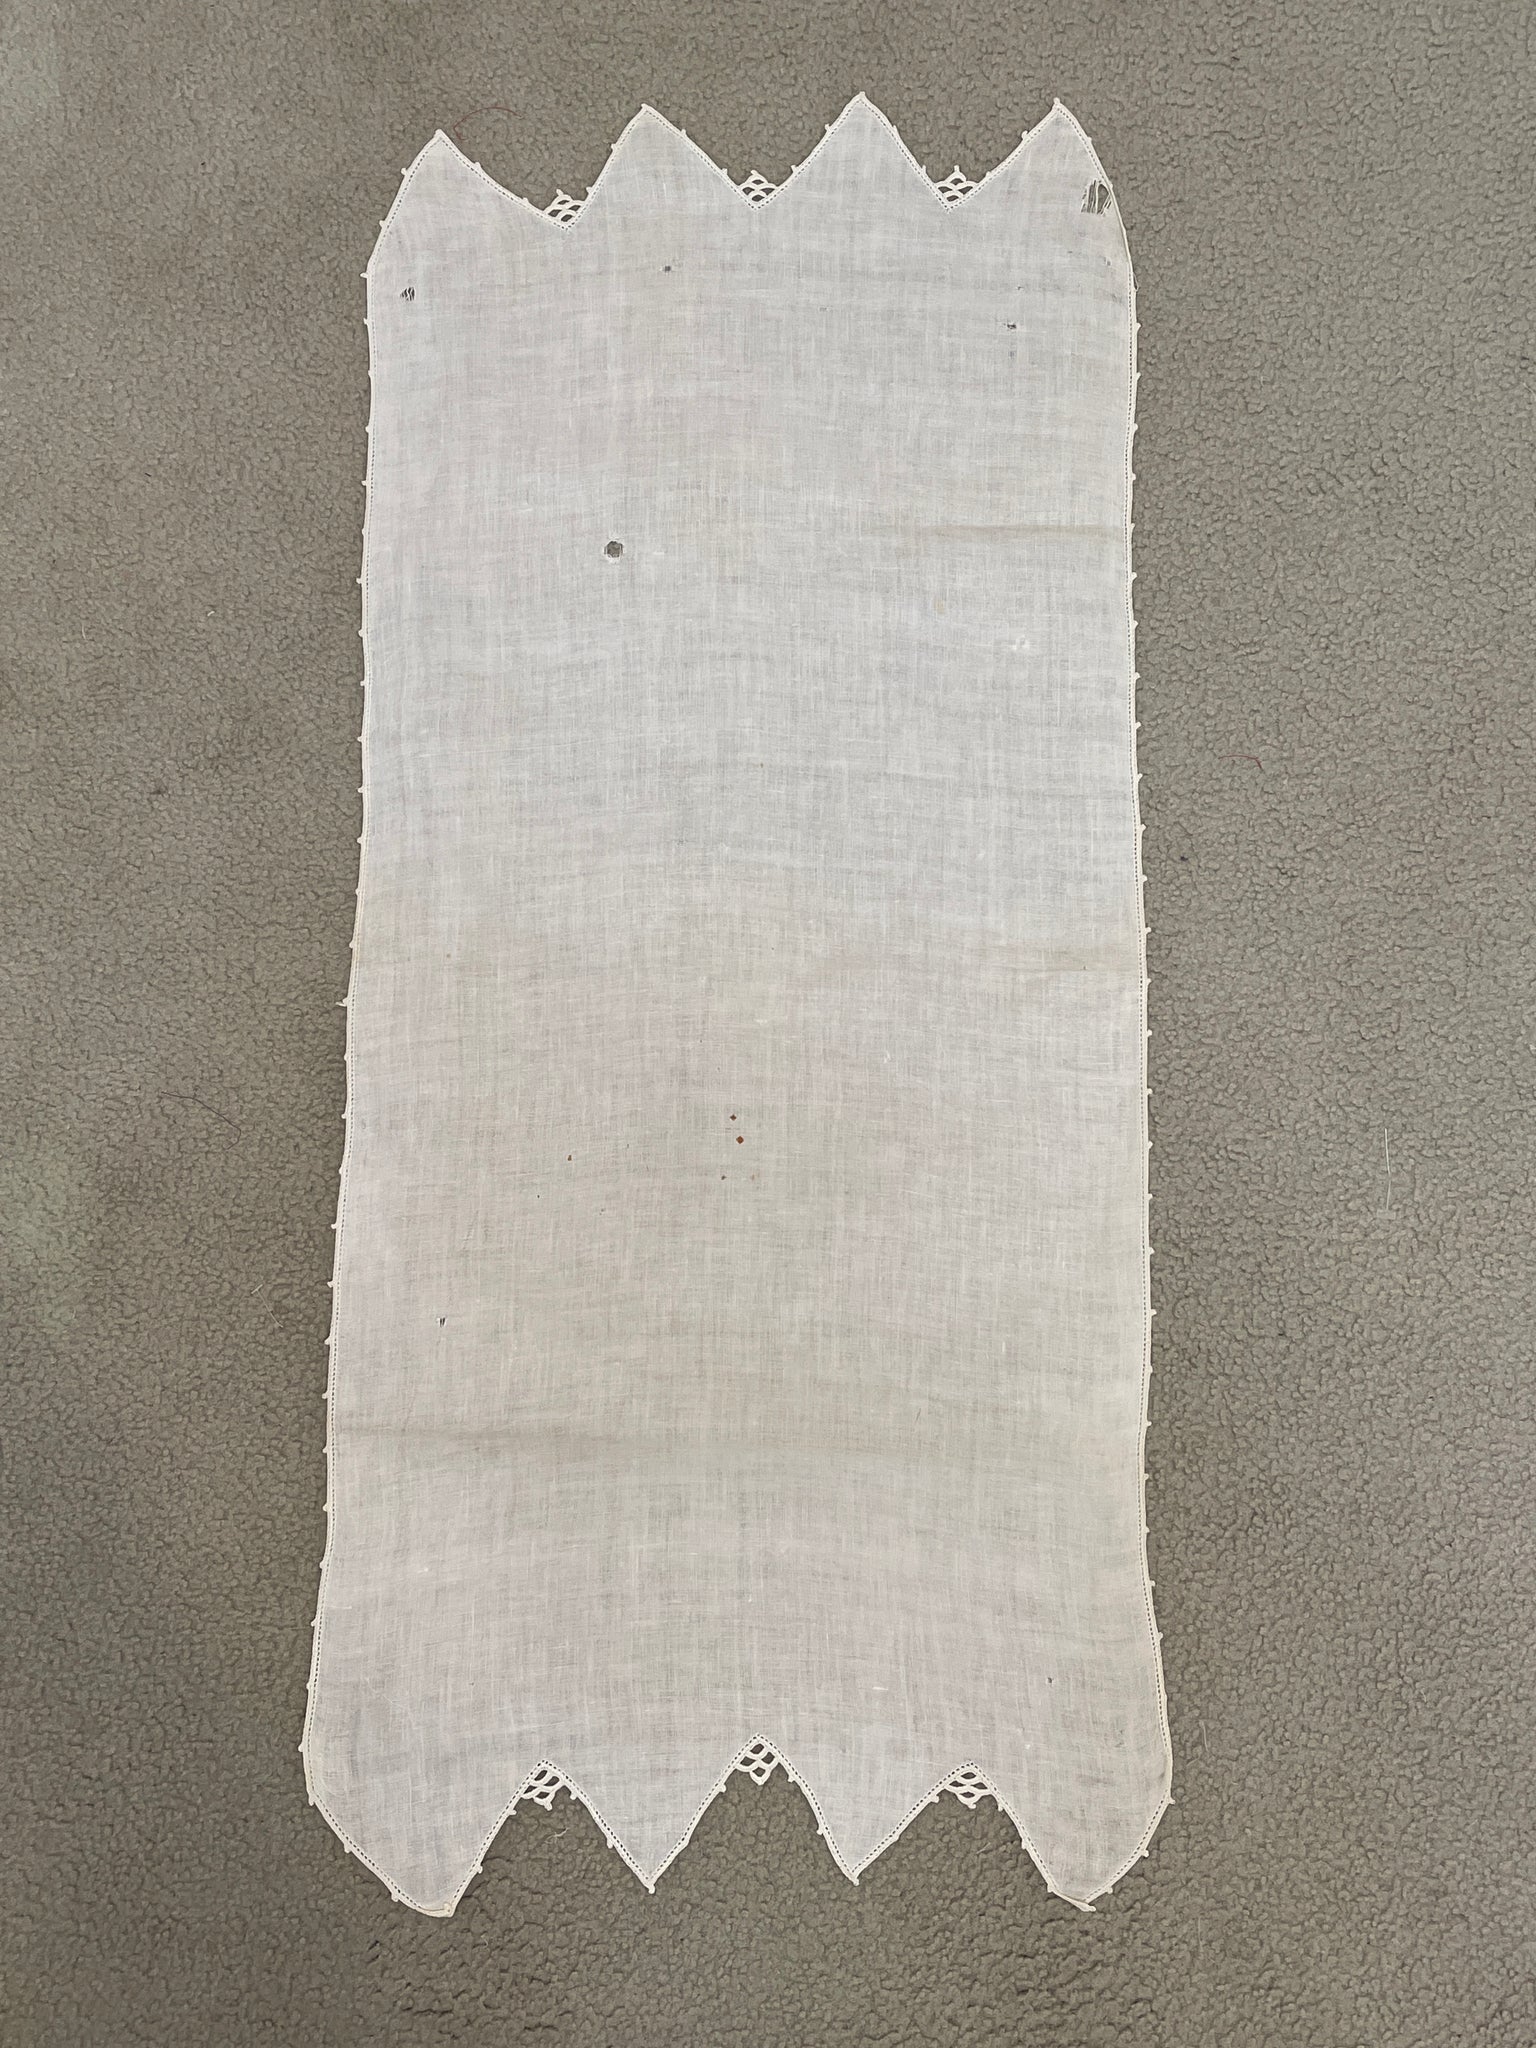 SALE Table Runner Vintage Linen - White with Crocheted Edges